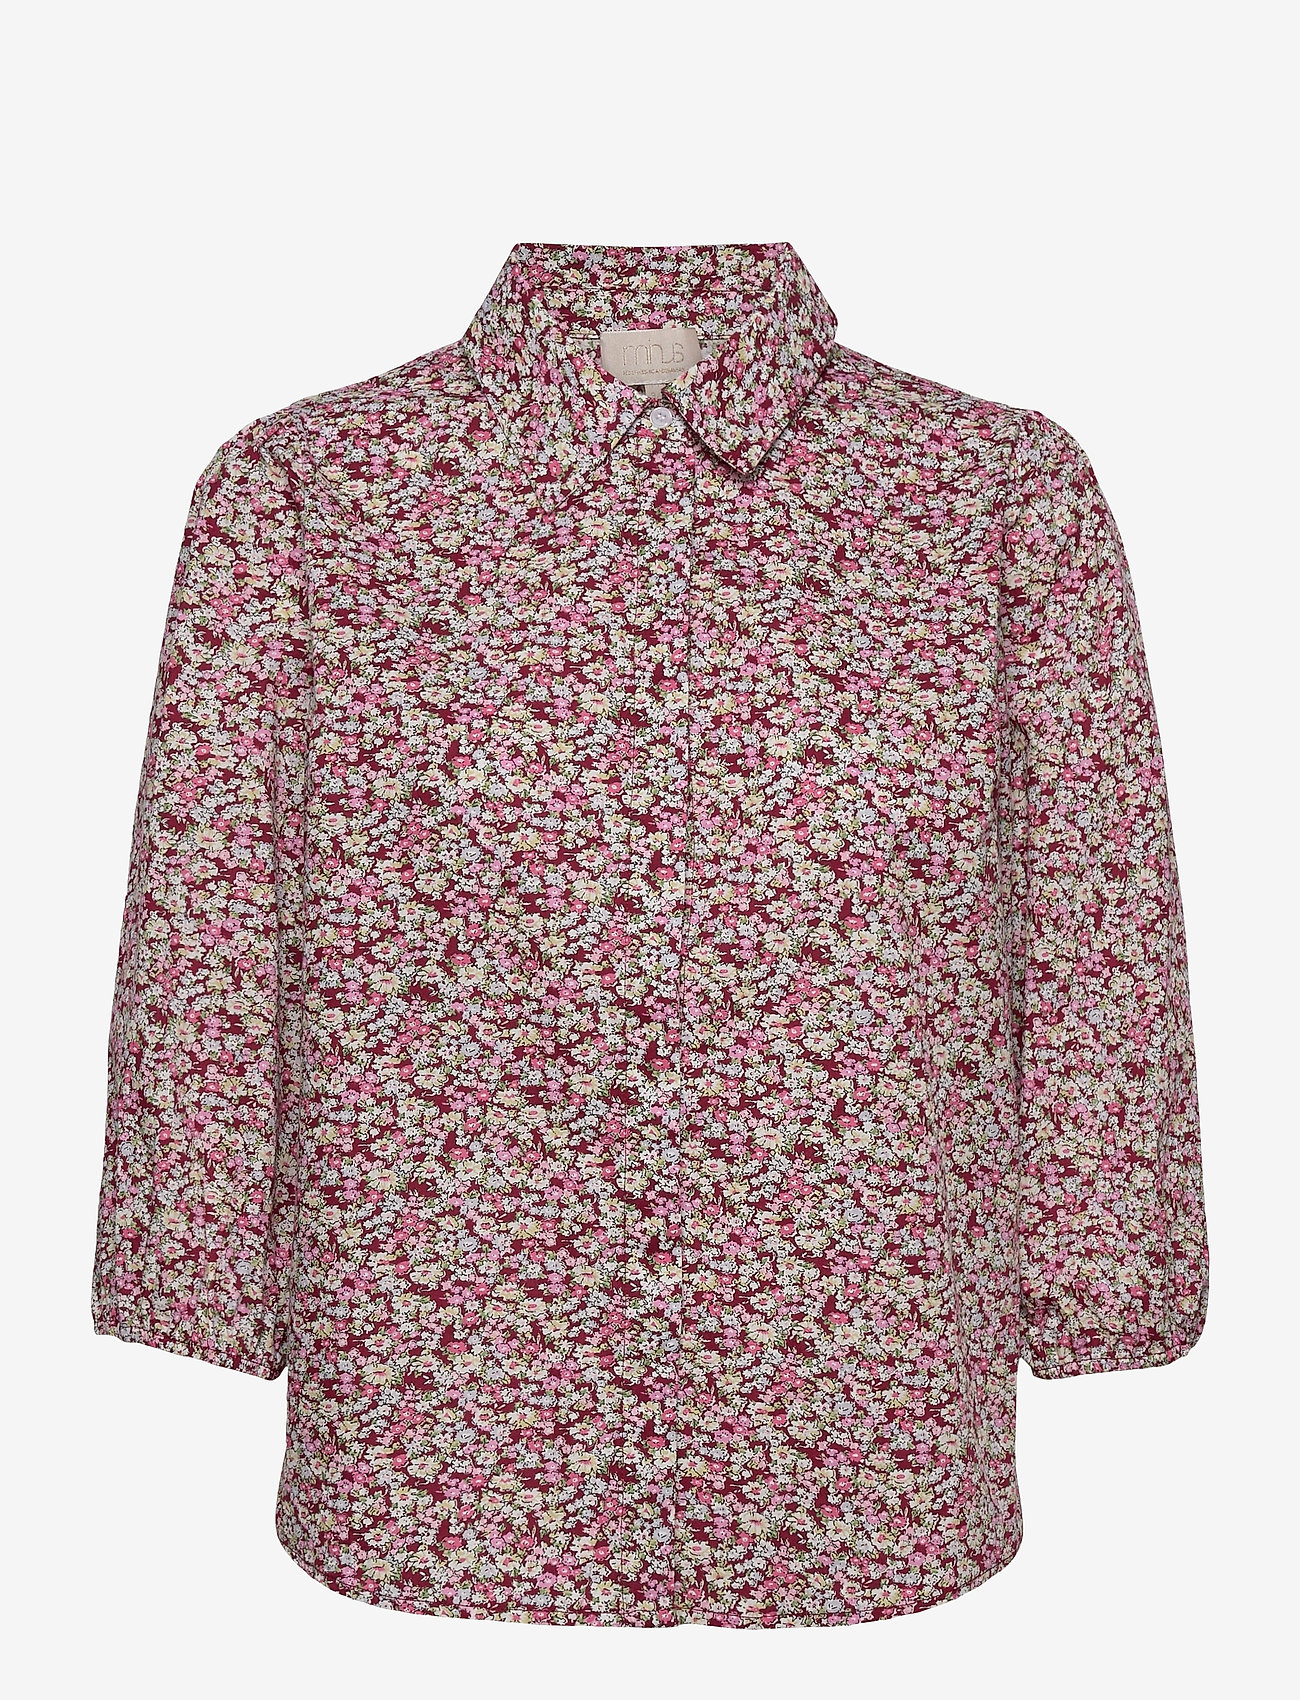 Minus - Rasmina shirt - langermede skjorter - pink flower print - 0